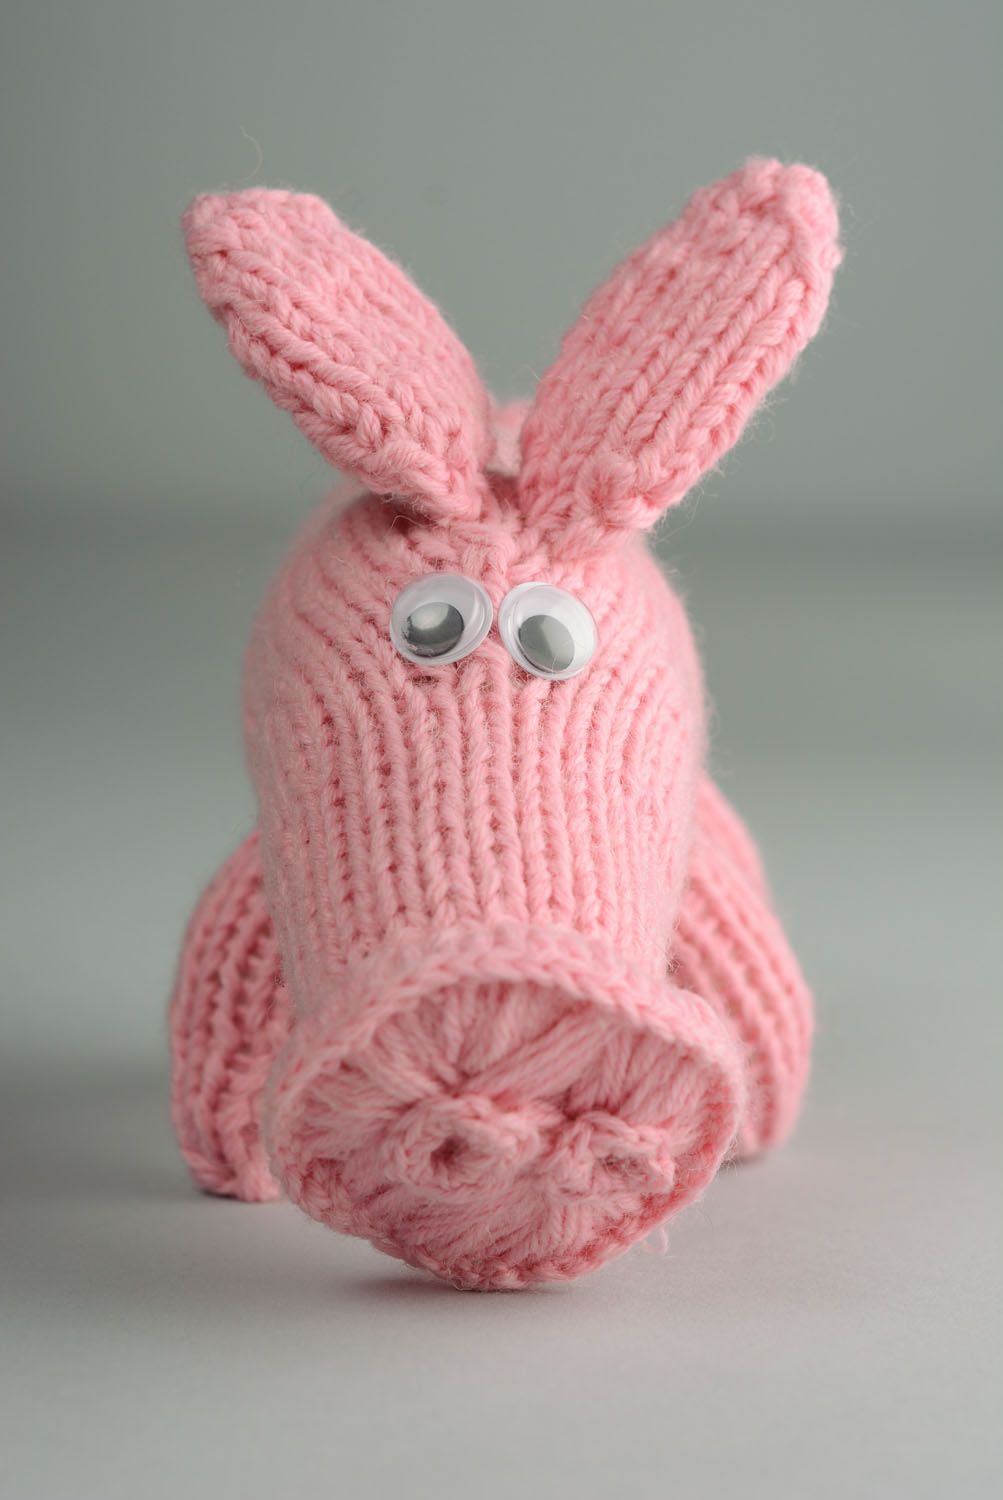 Homemade crochet toy Pig photo 2